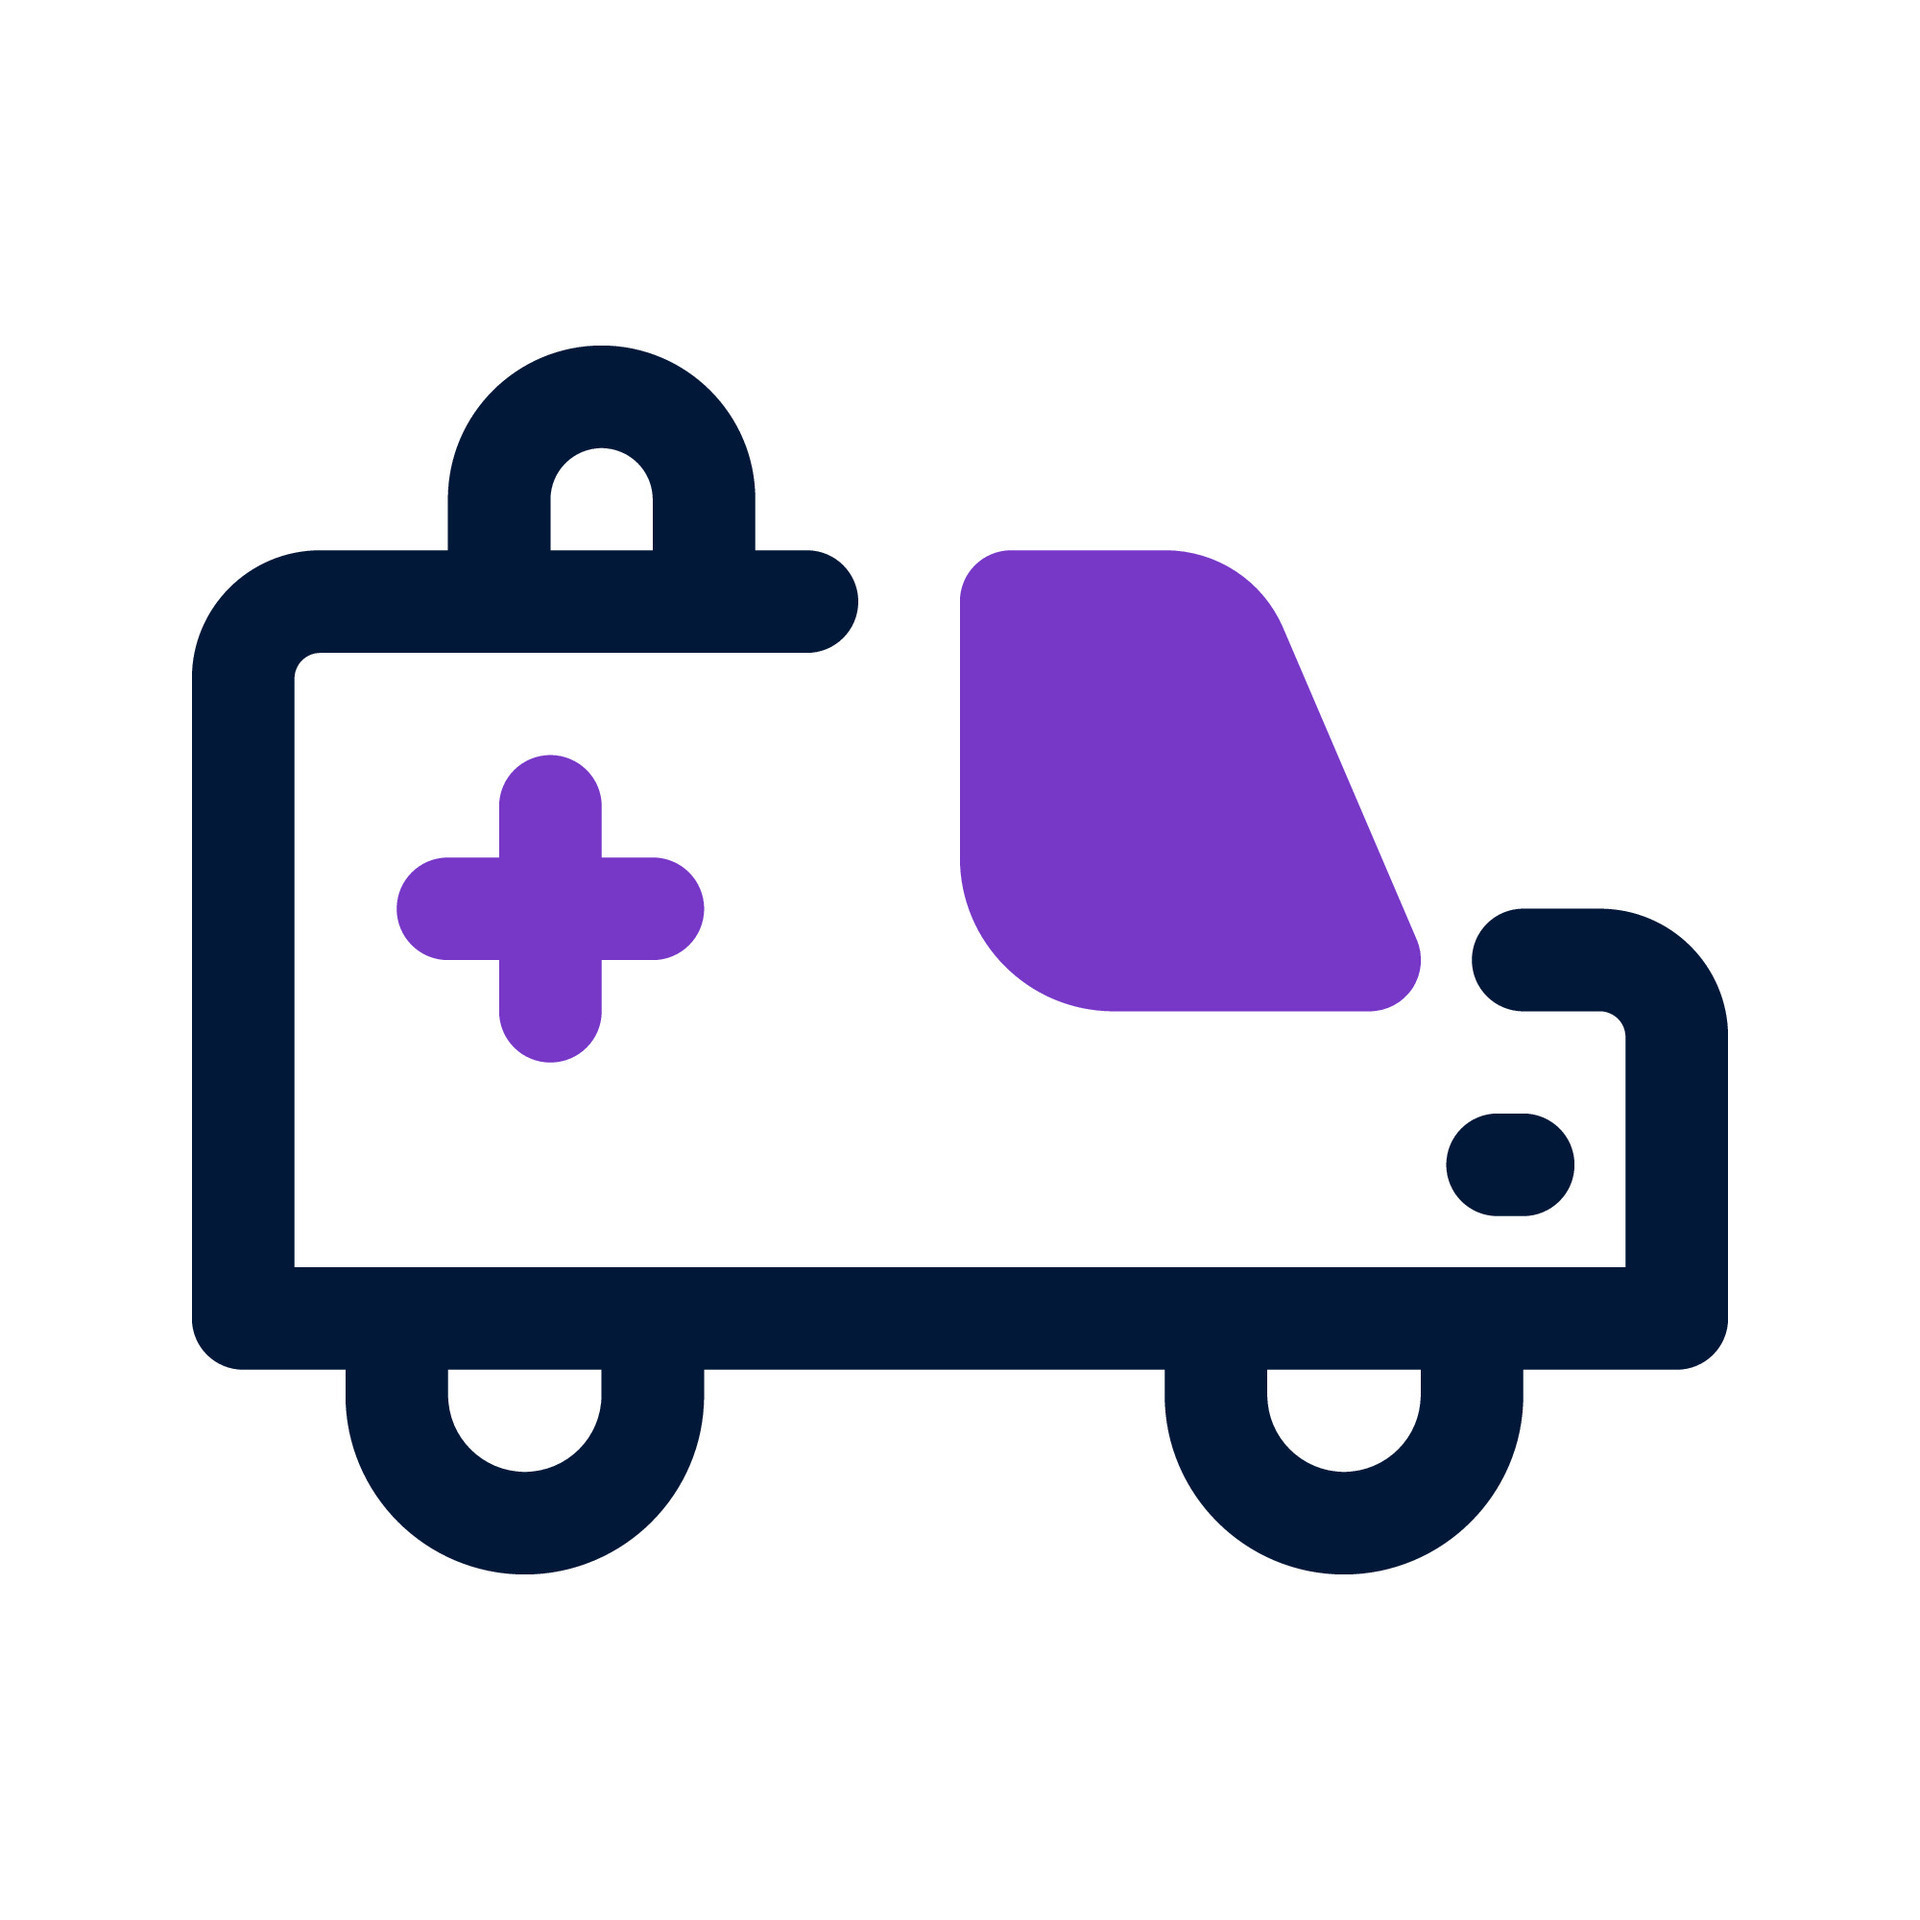 Premium Vector | Medical emergency ambulance logo design ideas